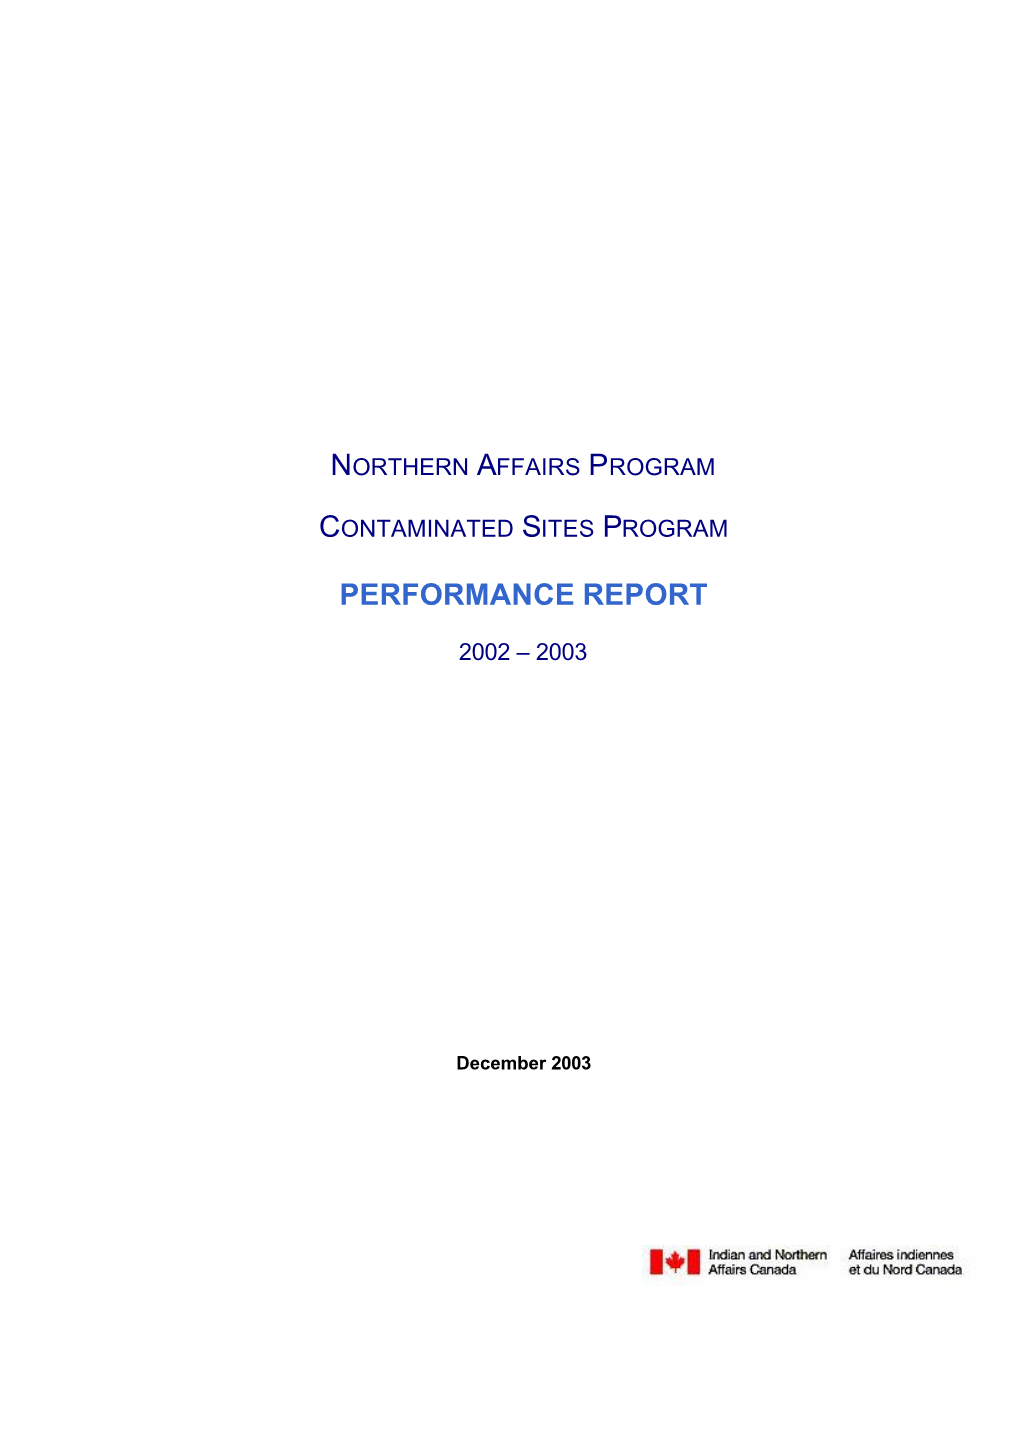 NAP Contaminated Sites Program Performkance Report 2002-2003